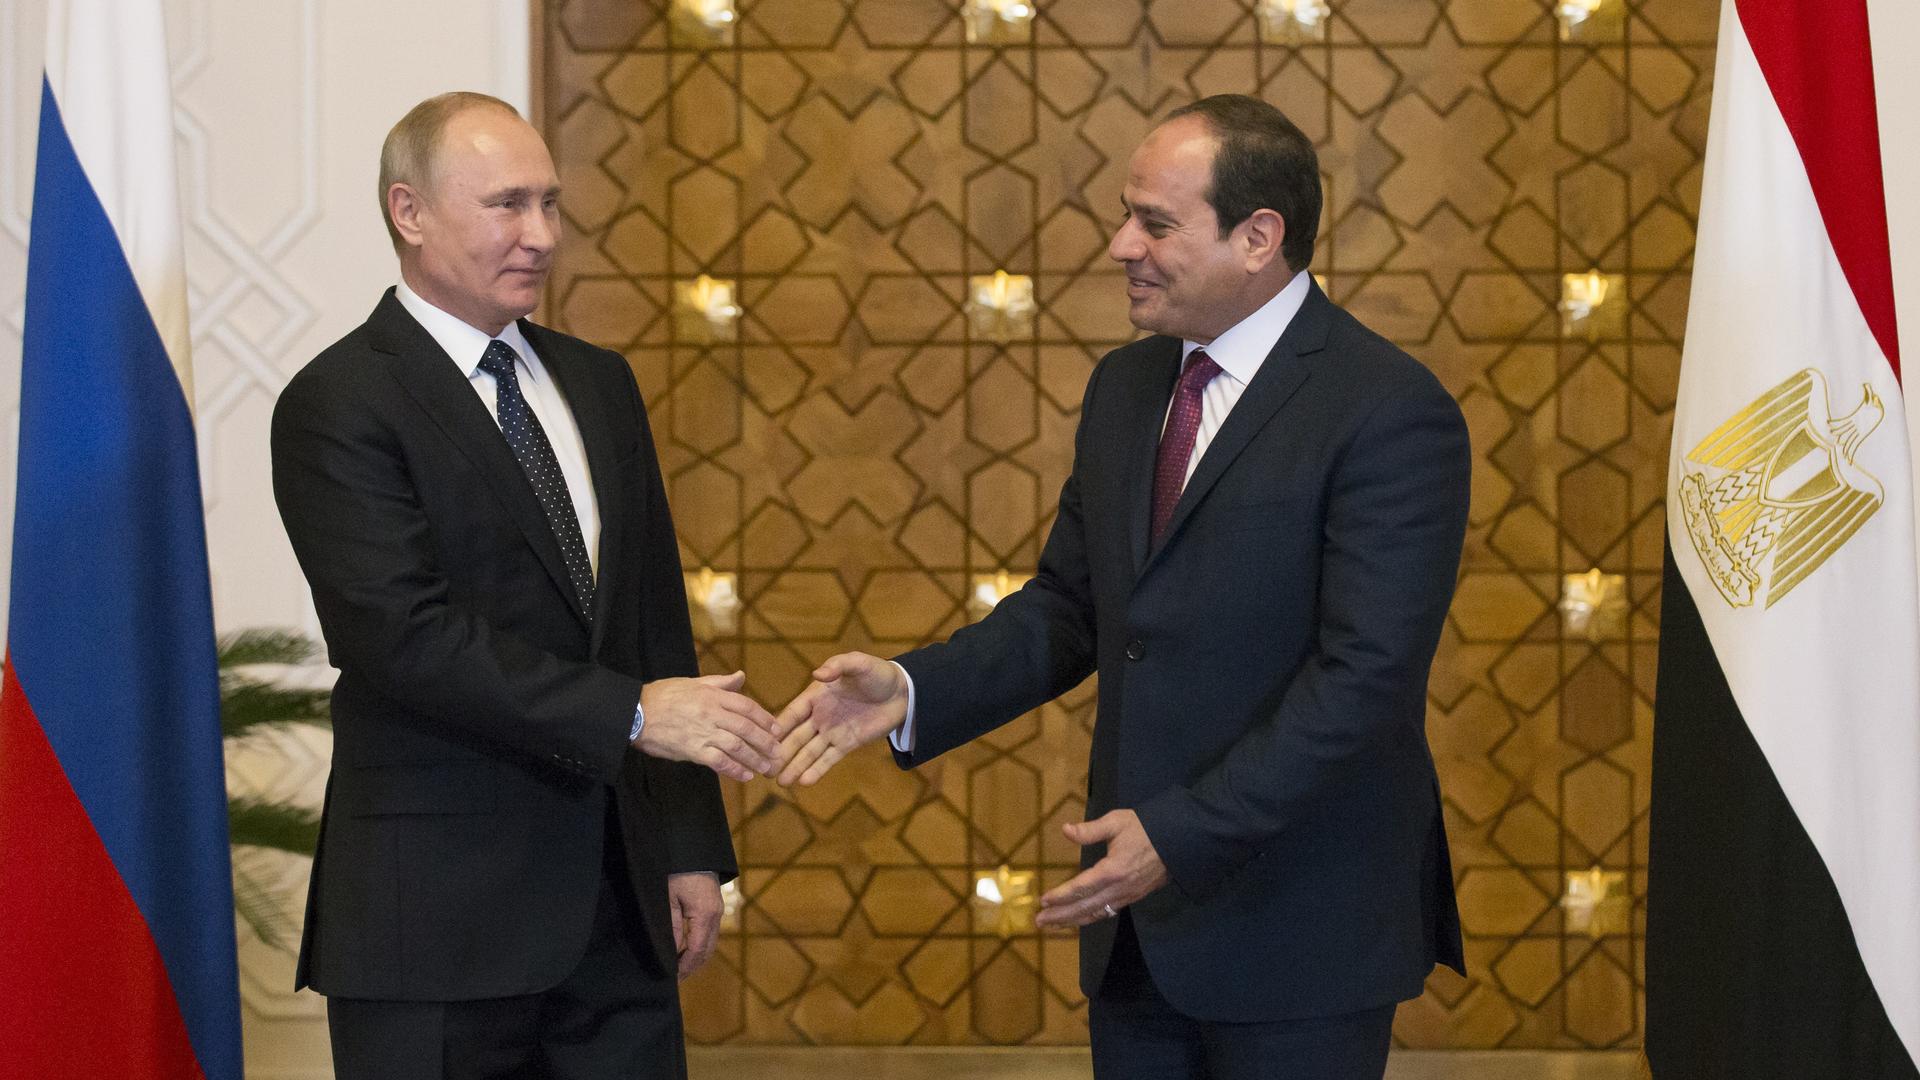 Russia's President Vladimir Putin meets his new friend, Egypt's President, Abdel Fattah al-Sisi, in Cairo on Monday